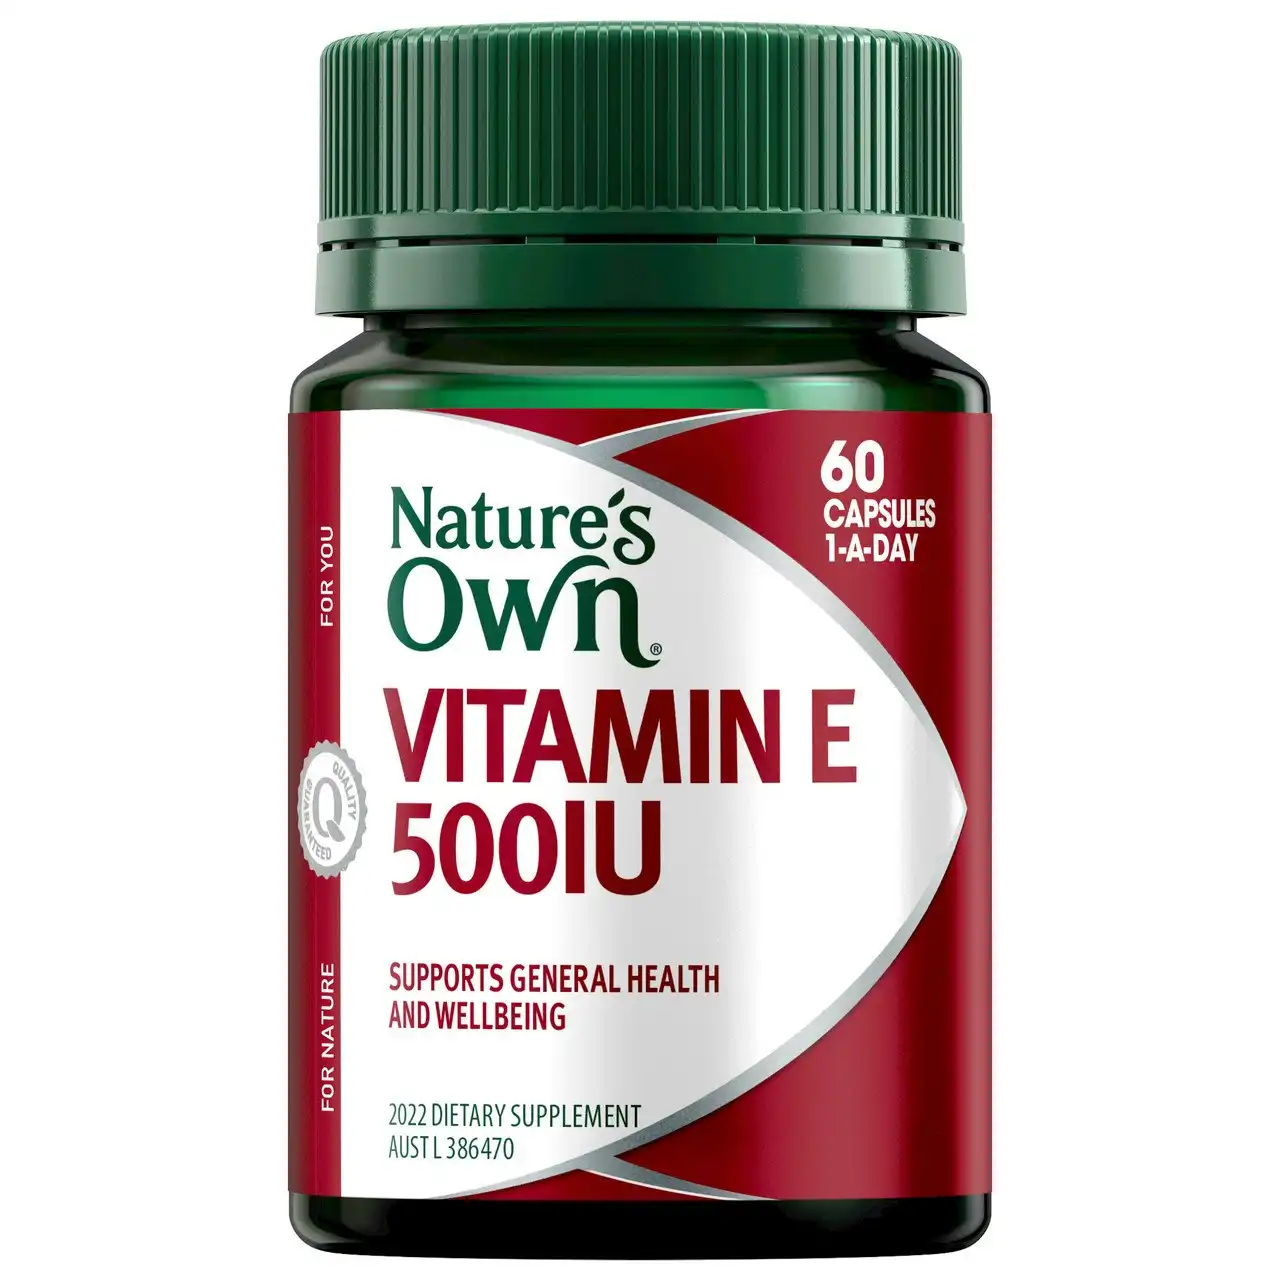 Nature's Own Vitamin E 500IU